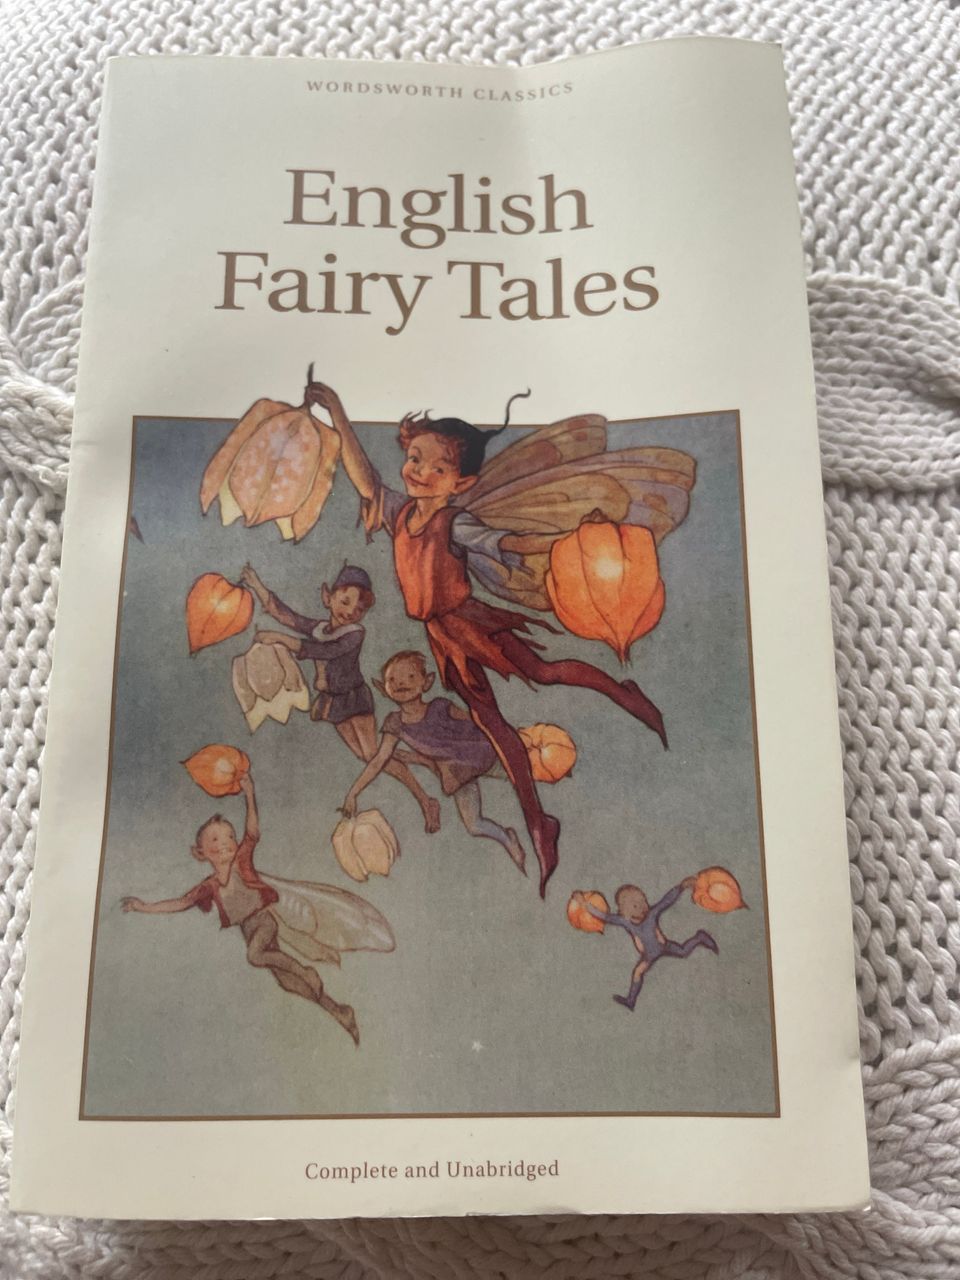 English fairytales